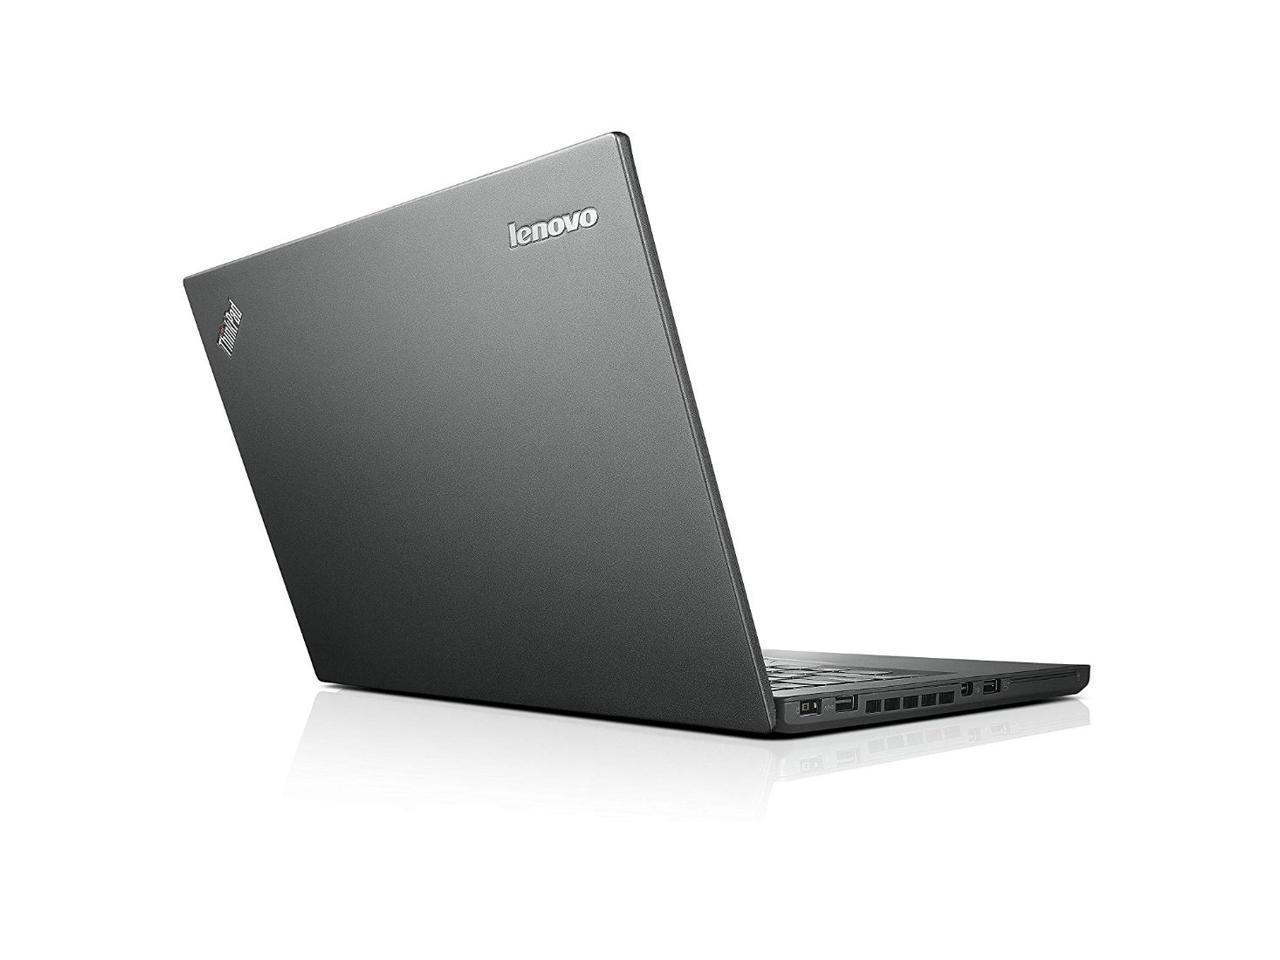 Lenovo ThinkPad T450S 14.0-in Laptop - Intel Core i5 5300U 5th Gen 2.30 GHz 8GB 256GB SSD Windows 10 Pro 64-Bit - Webcam